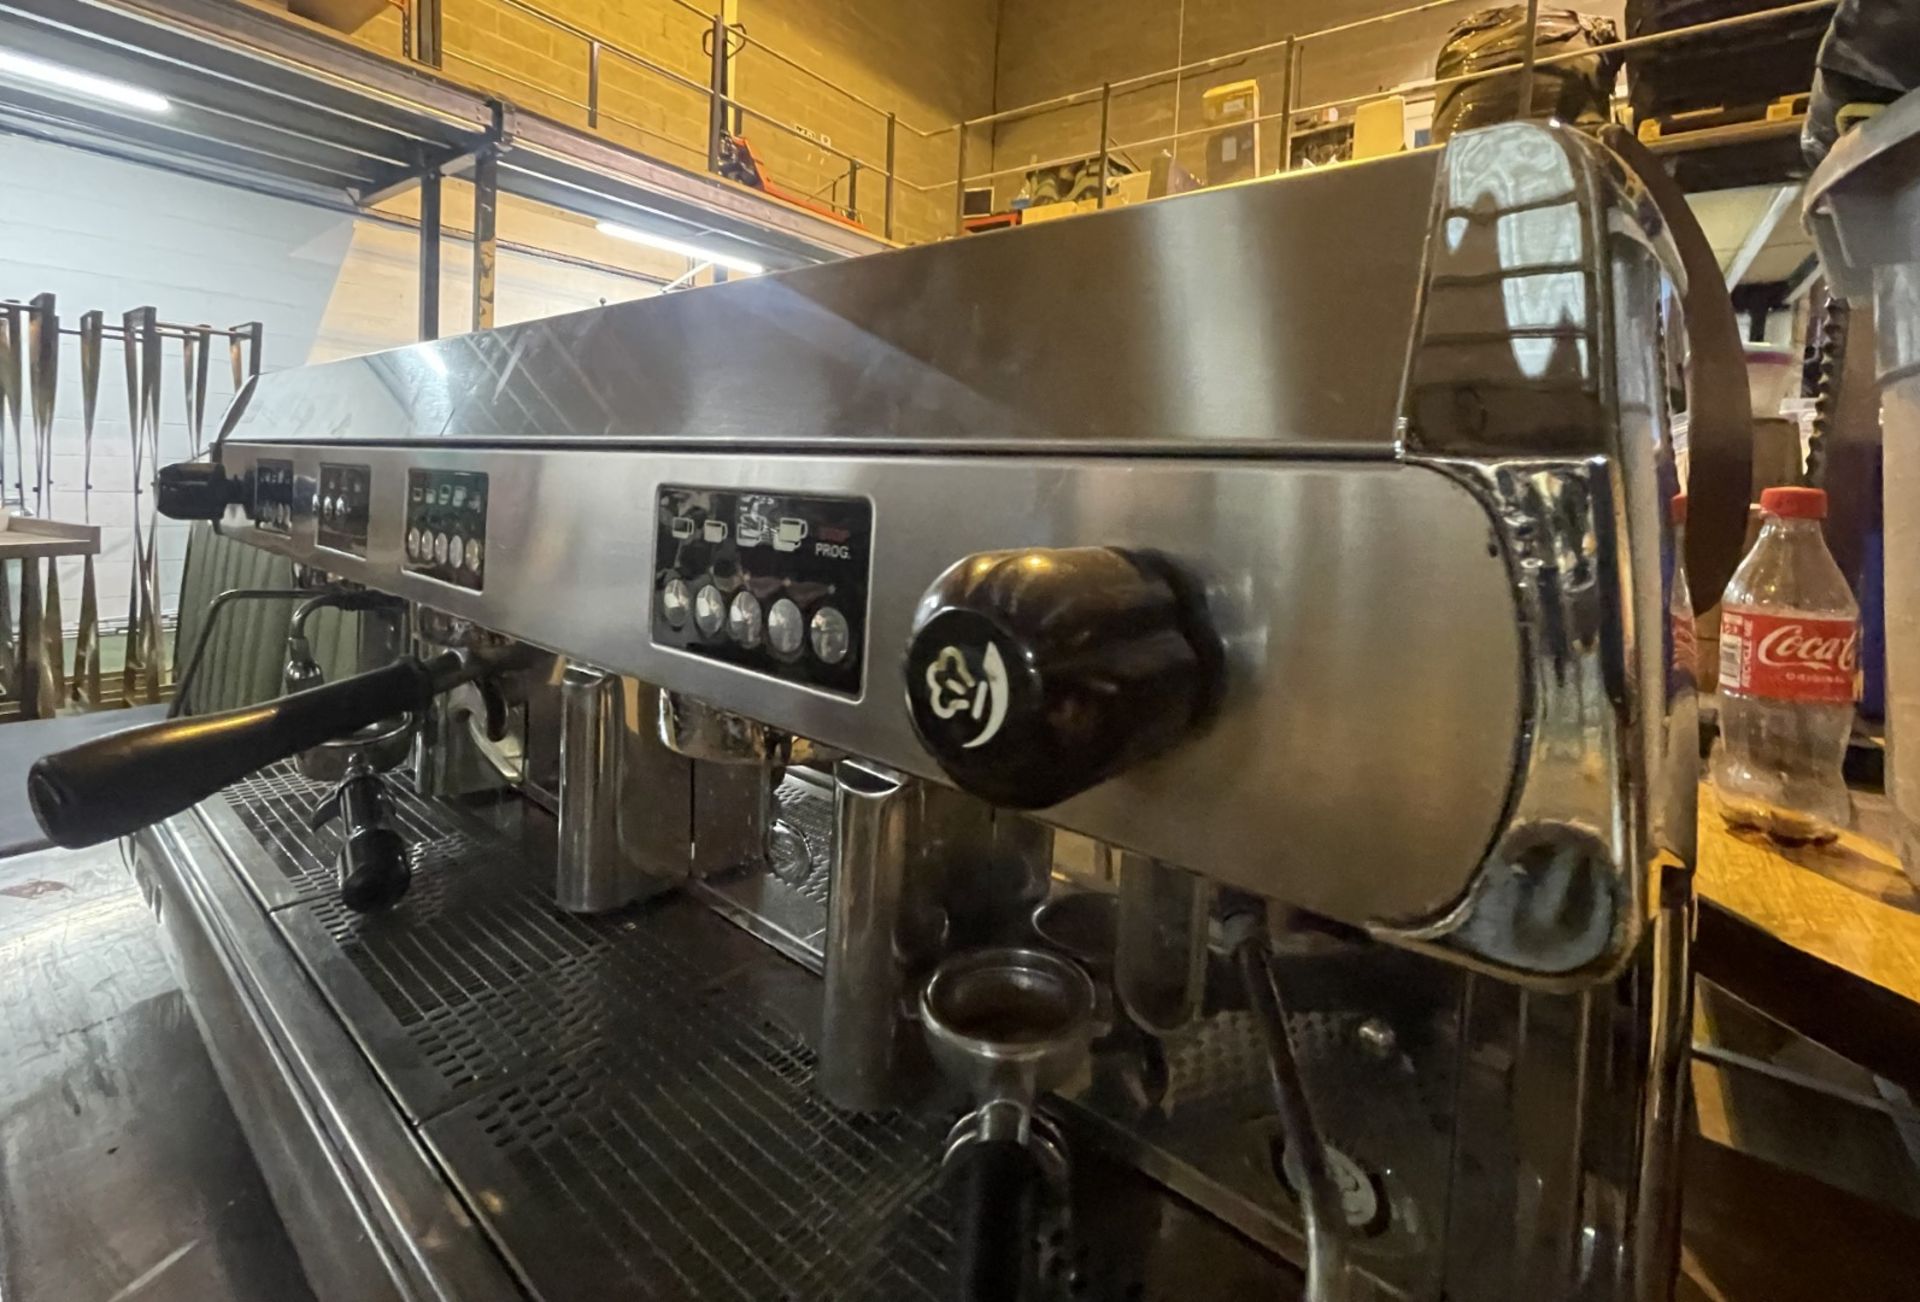 1 x Polaris Wega 3 Group Commercial Espresso Coffee Machine - Stainless Steel Exterior - 3 Phase - Image 9 of 14